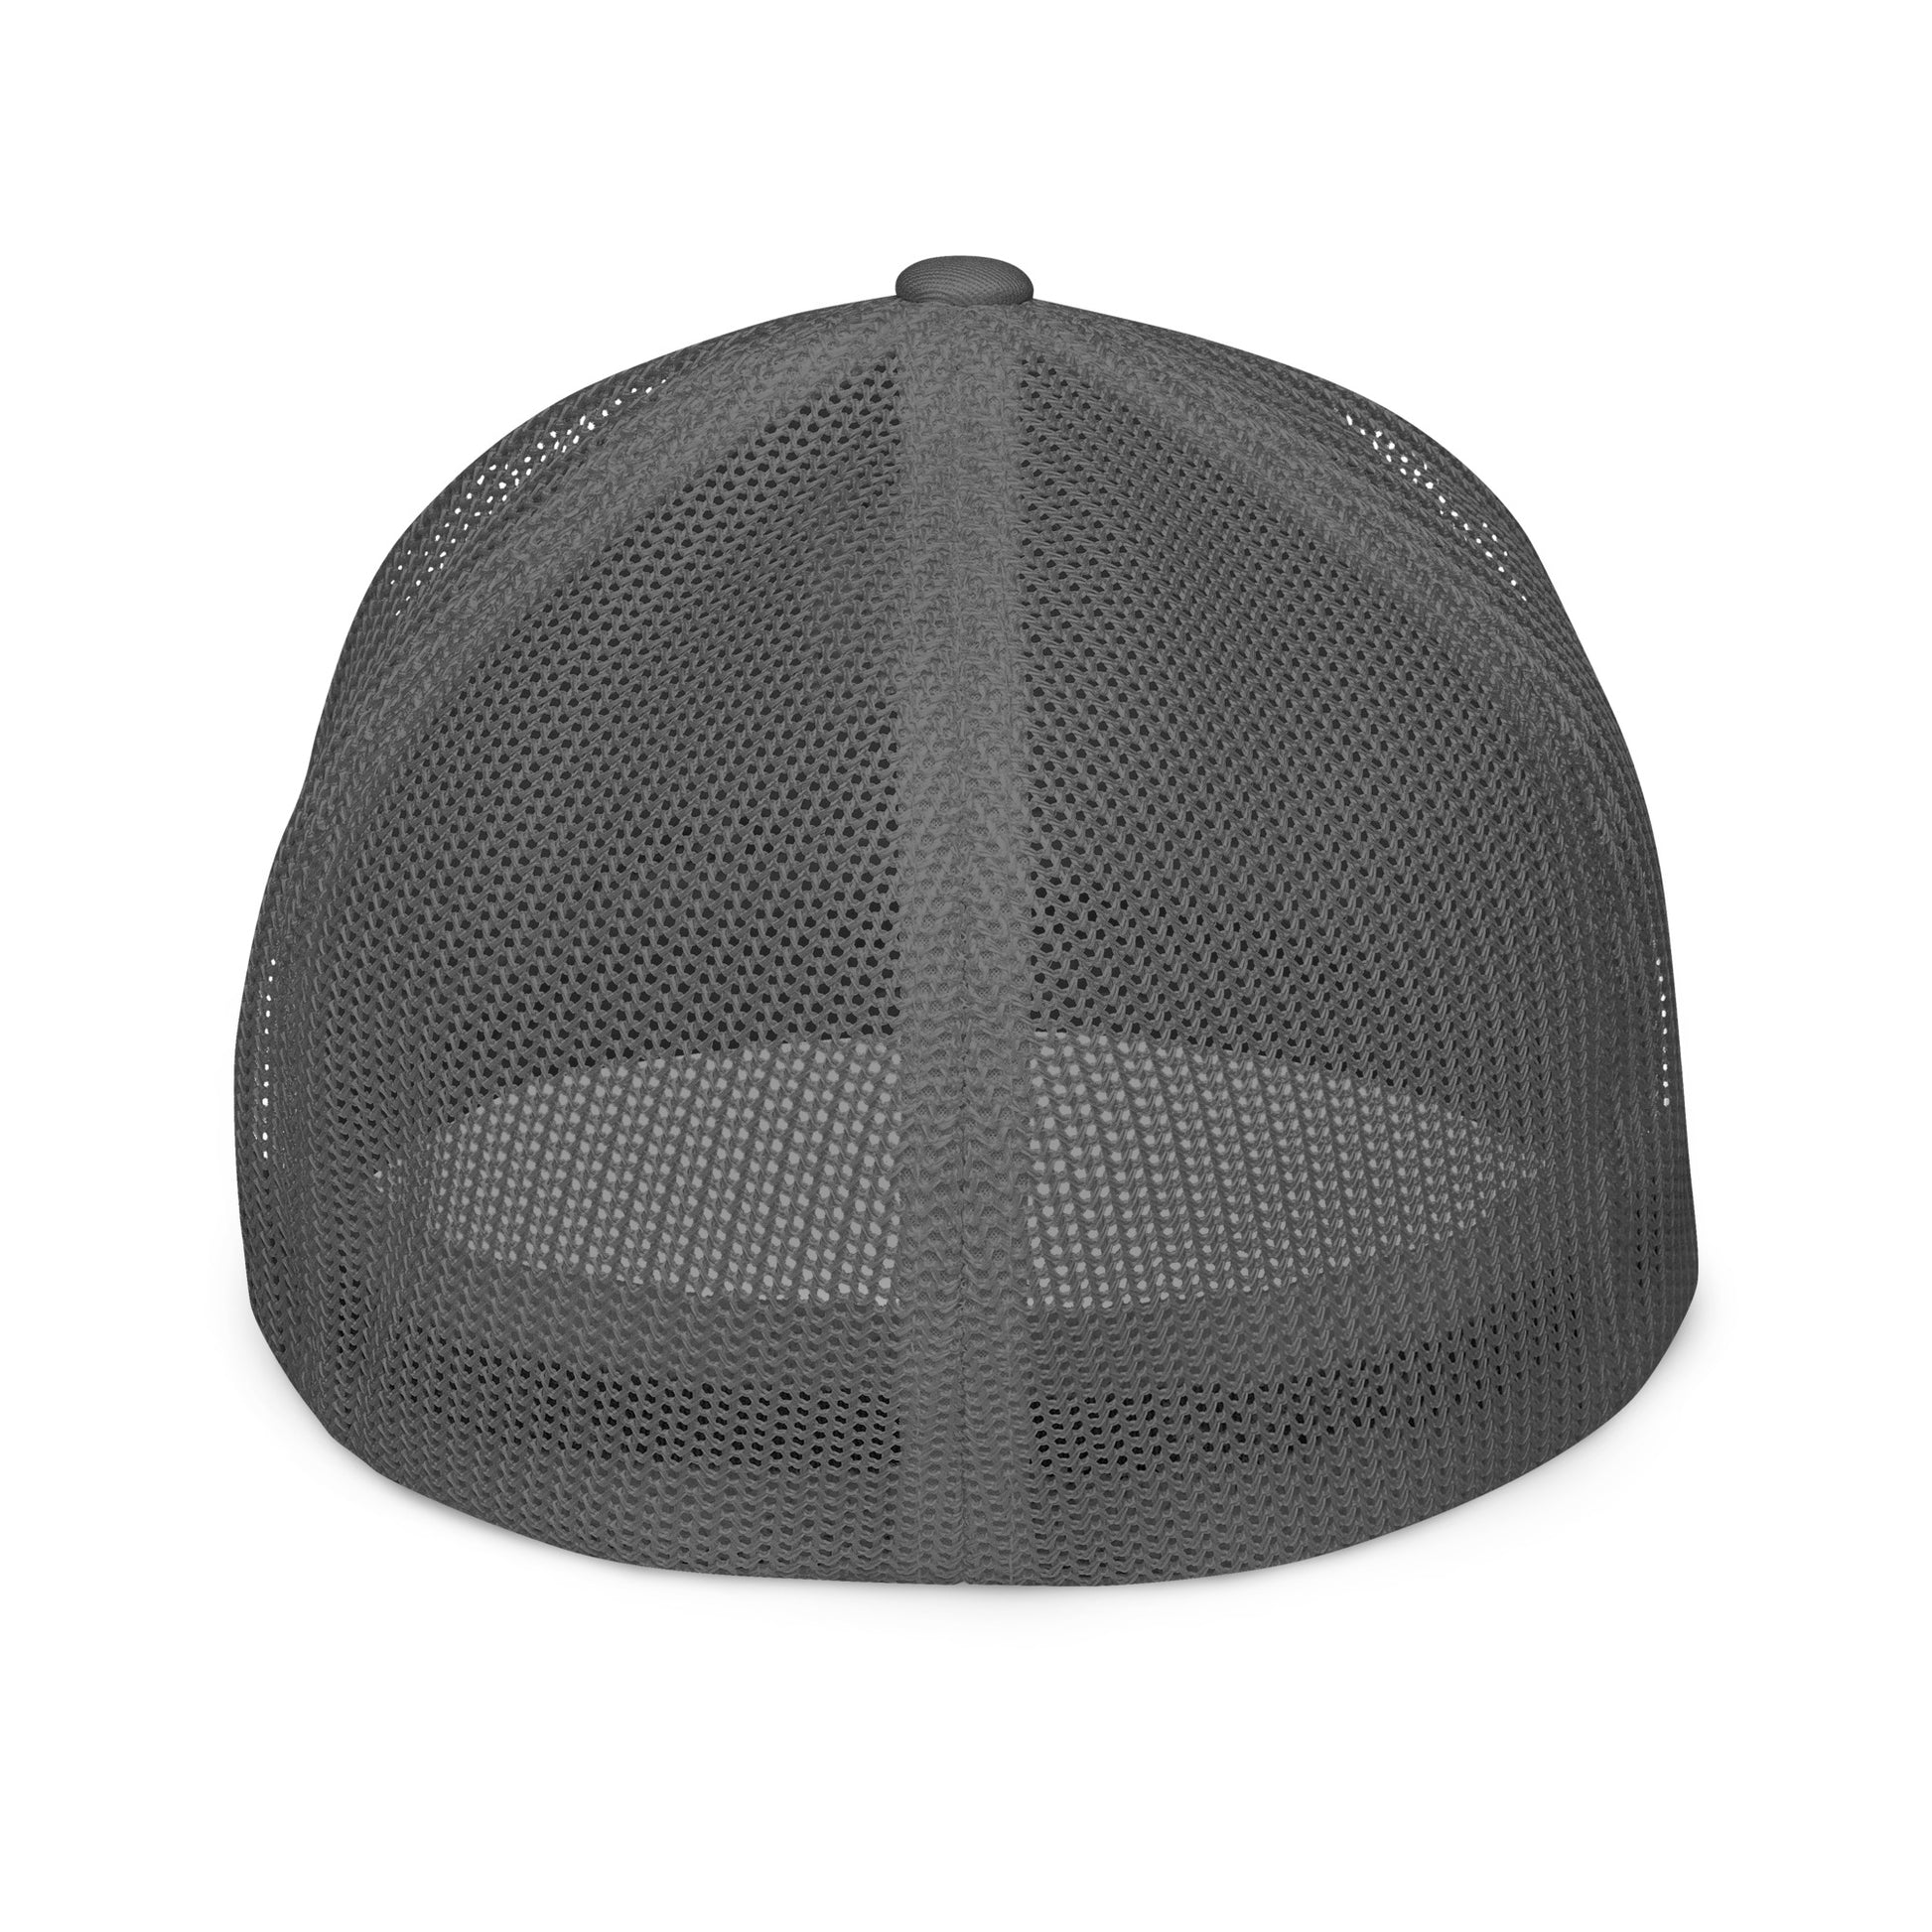 Hi 👋 Emoji Mesh Flexfit Hat in grey by Hi Happy interactions